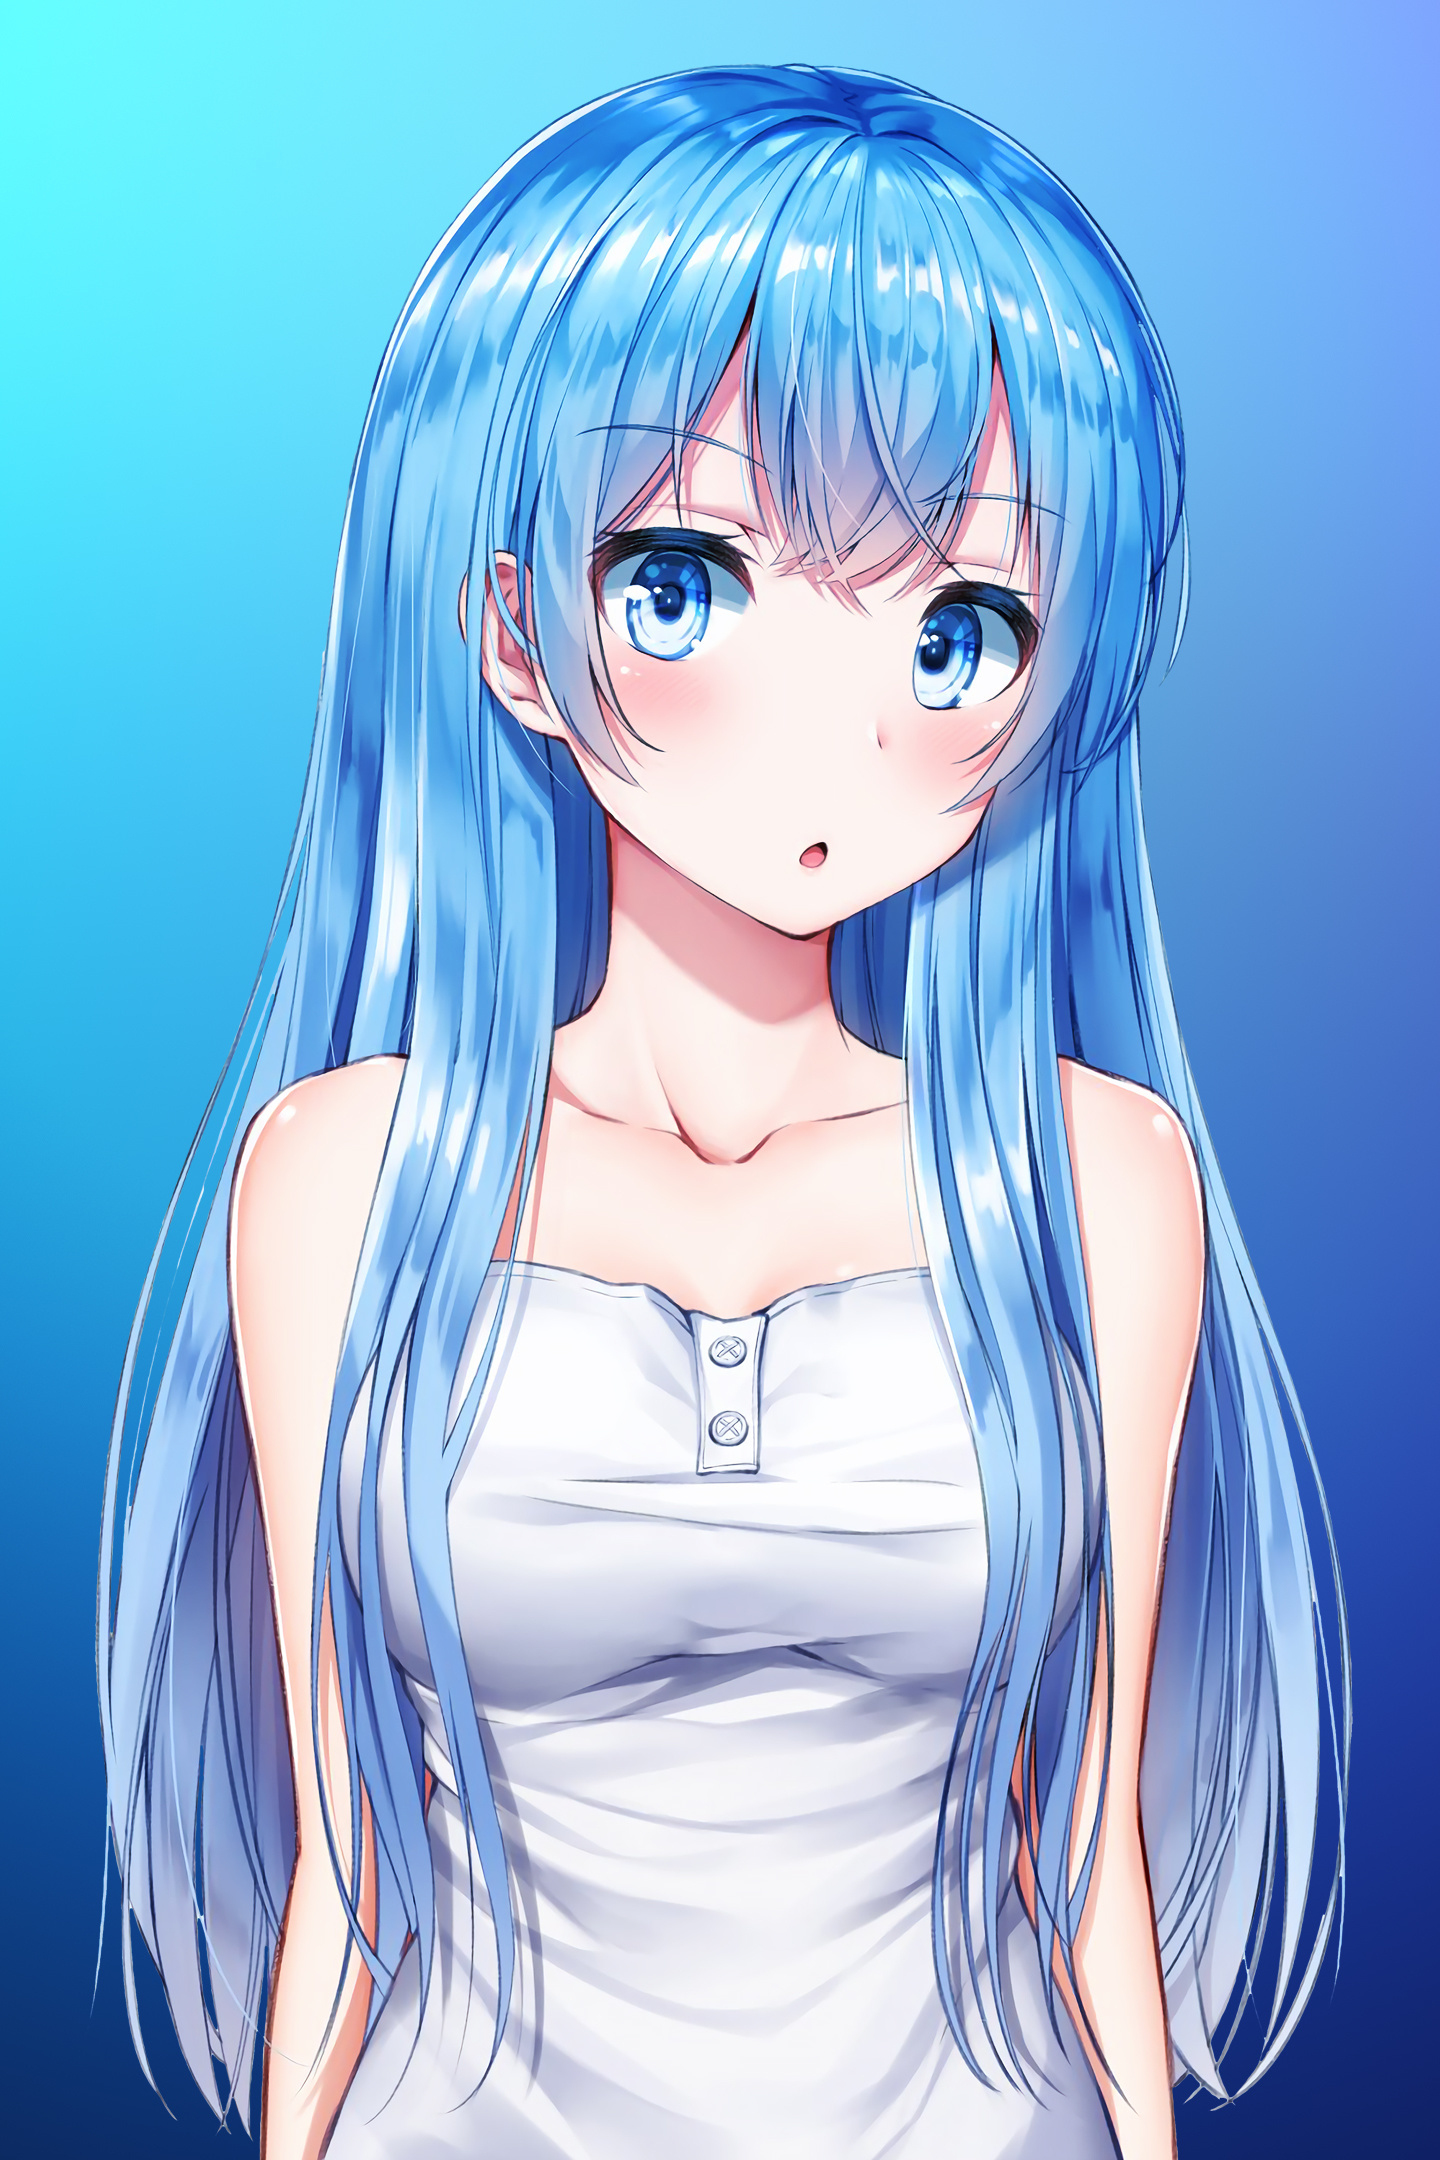 Download 1440x2960 Wallpaper Blue Hair Anime Girl Cute Original